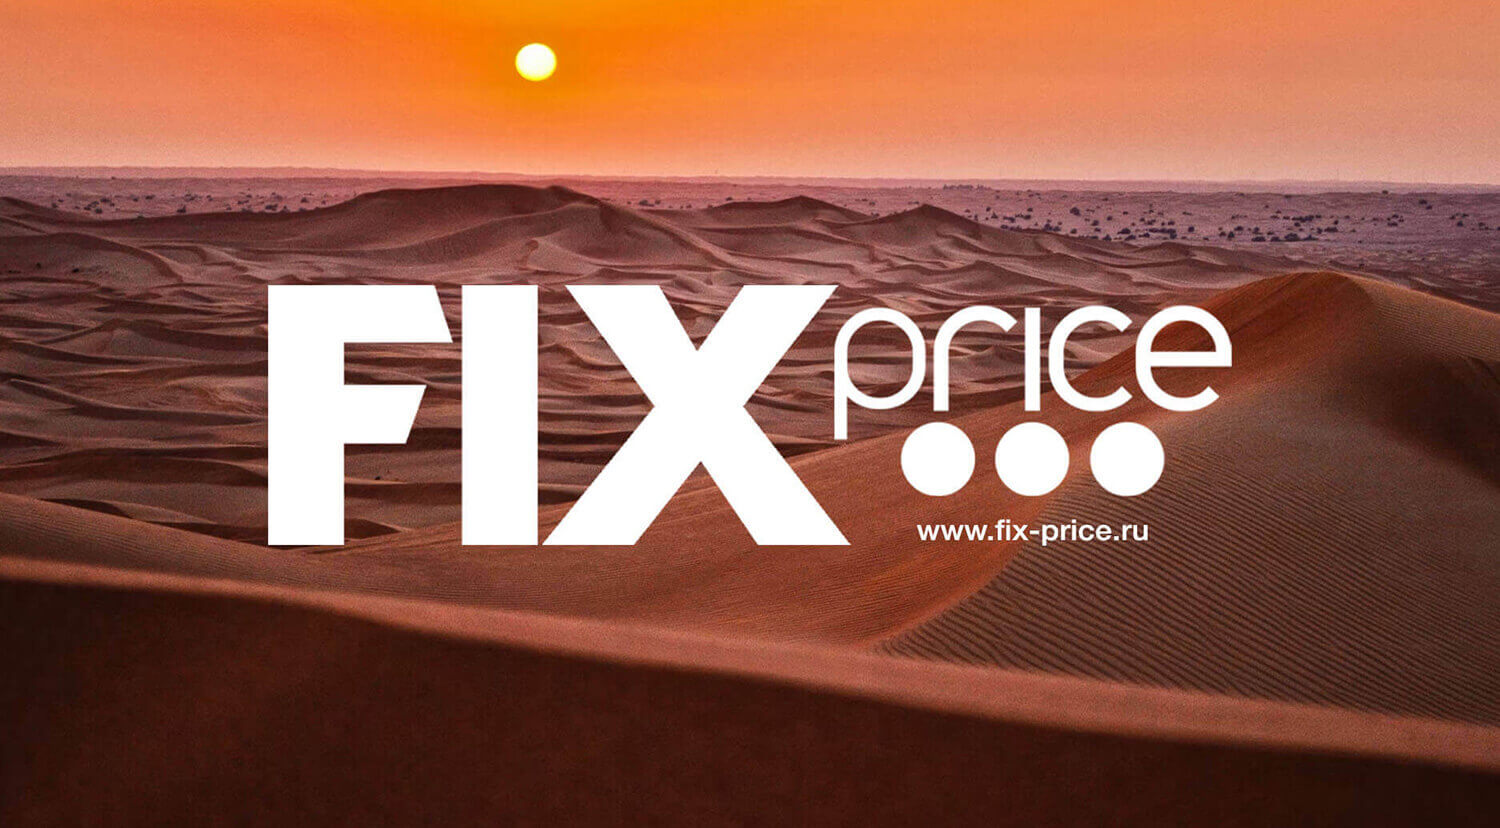 Fix Price Russia, Rebranding, Identity, Graphic Communications